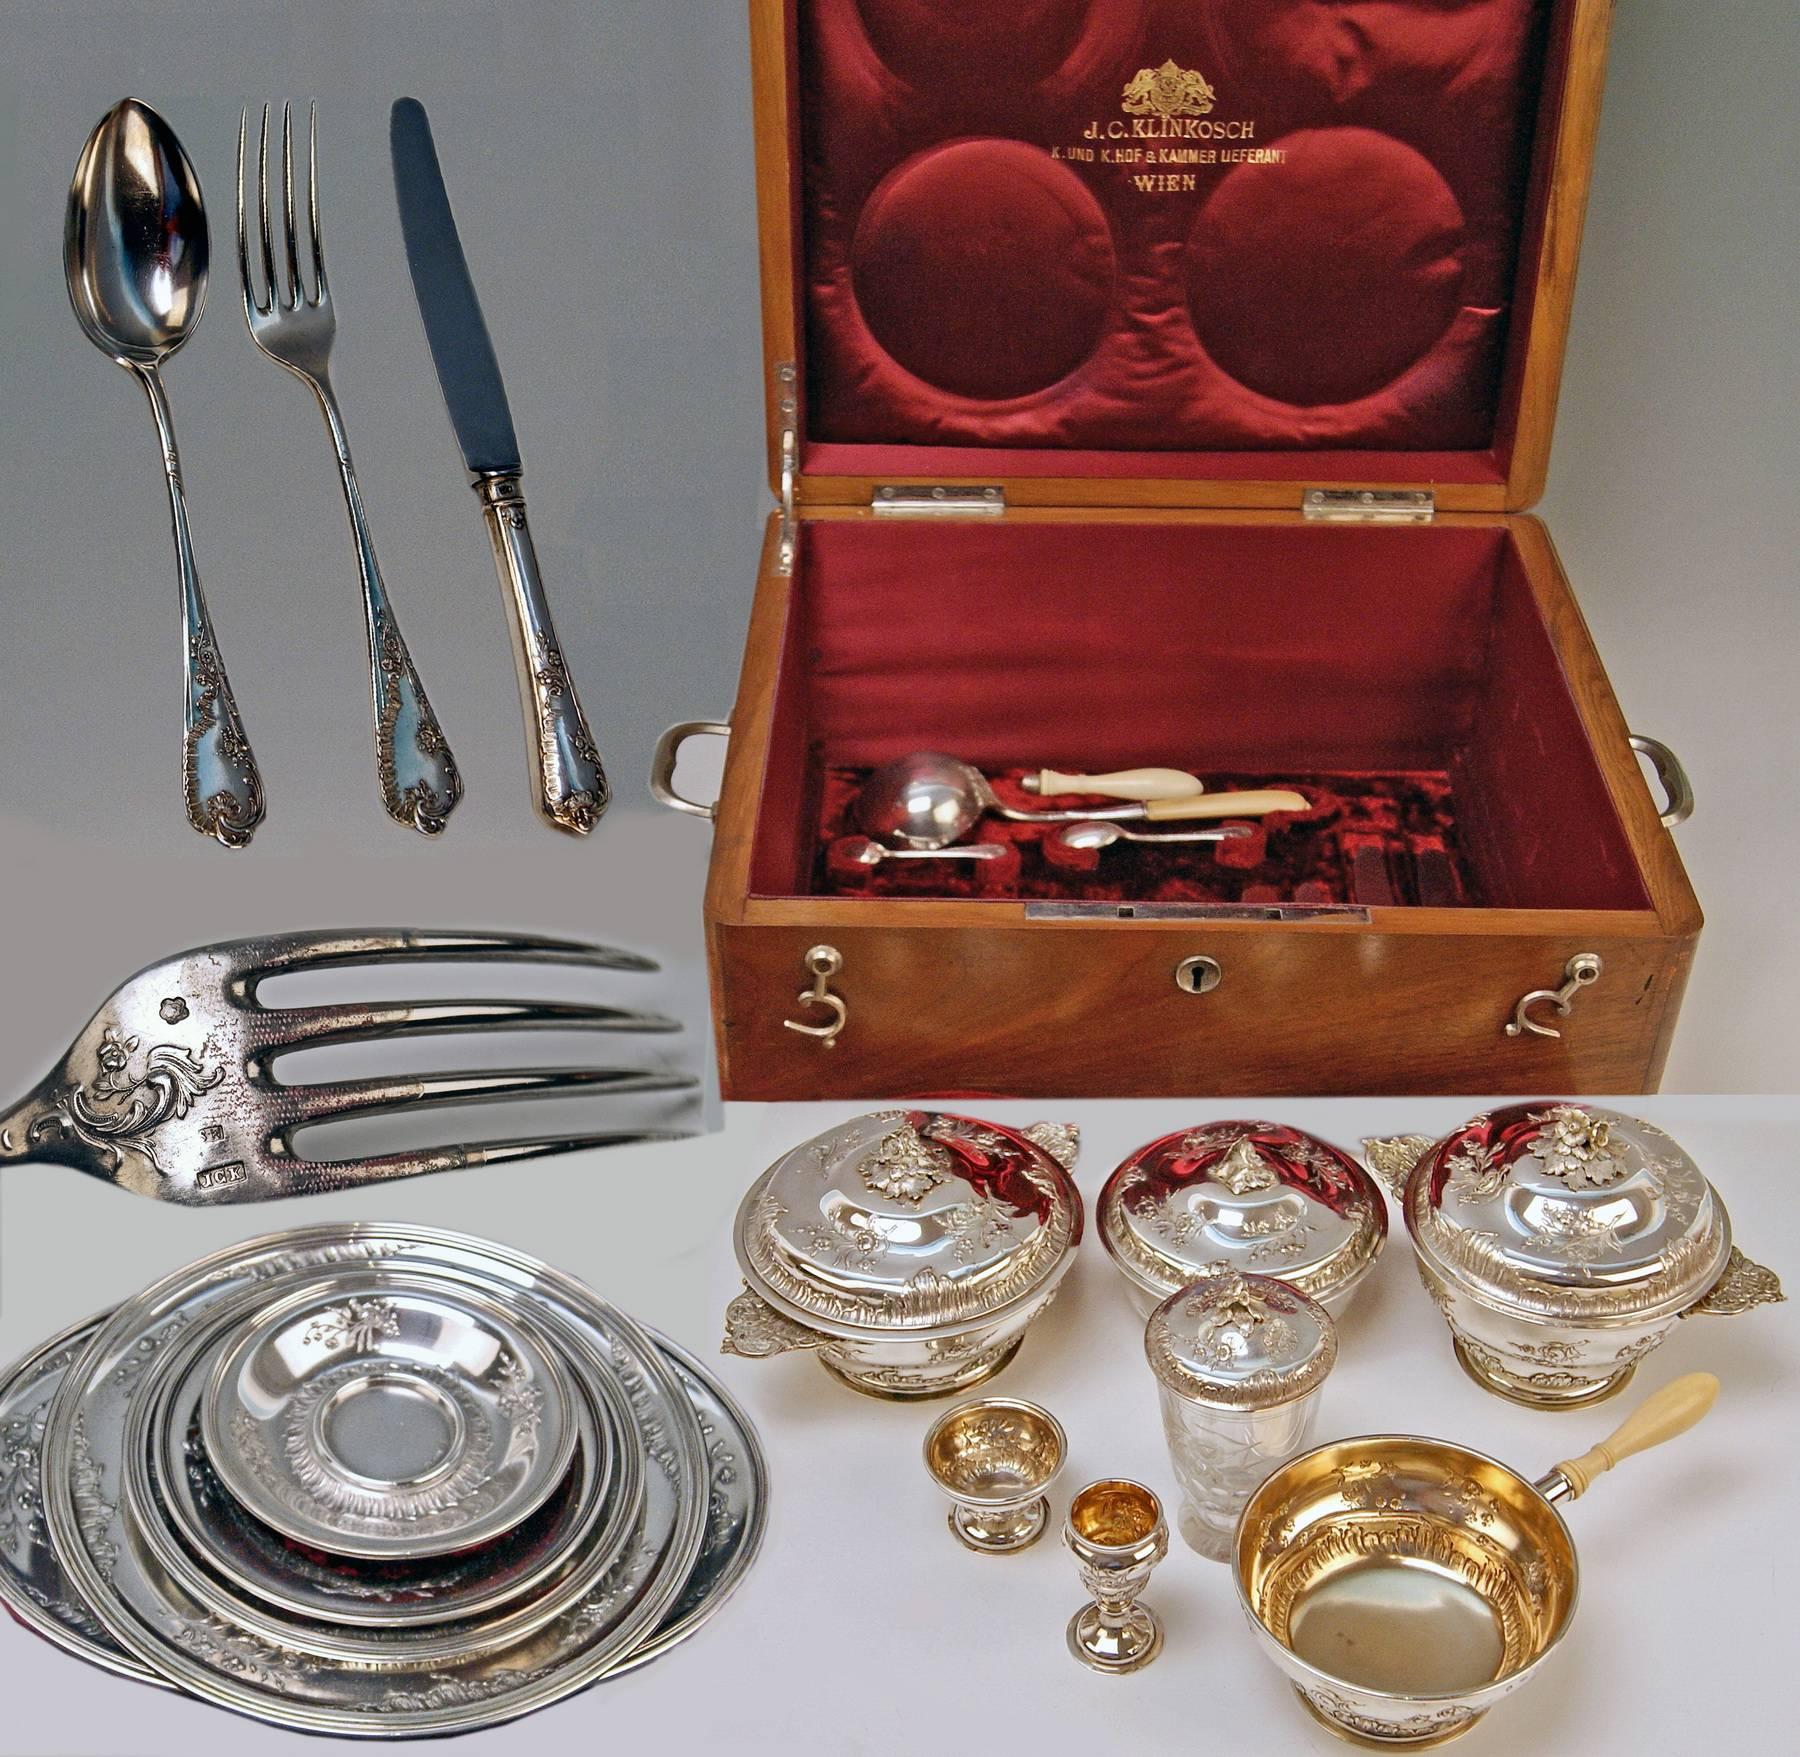 Late Victorian Silver Austria Vienna Set of Dishes Countess Sandizell-Lamberg by Klinkosch